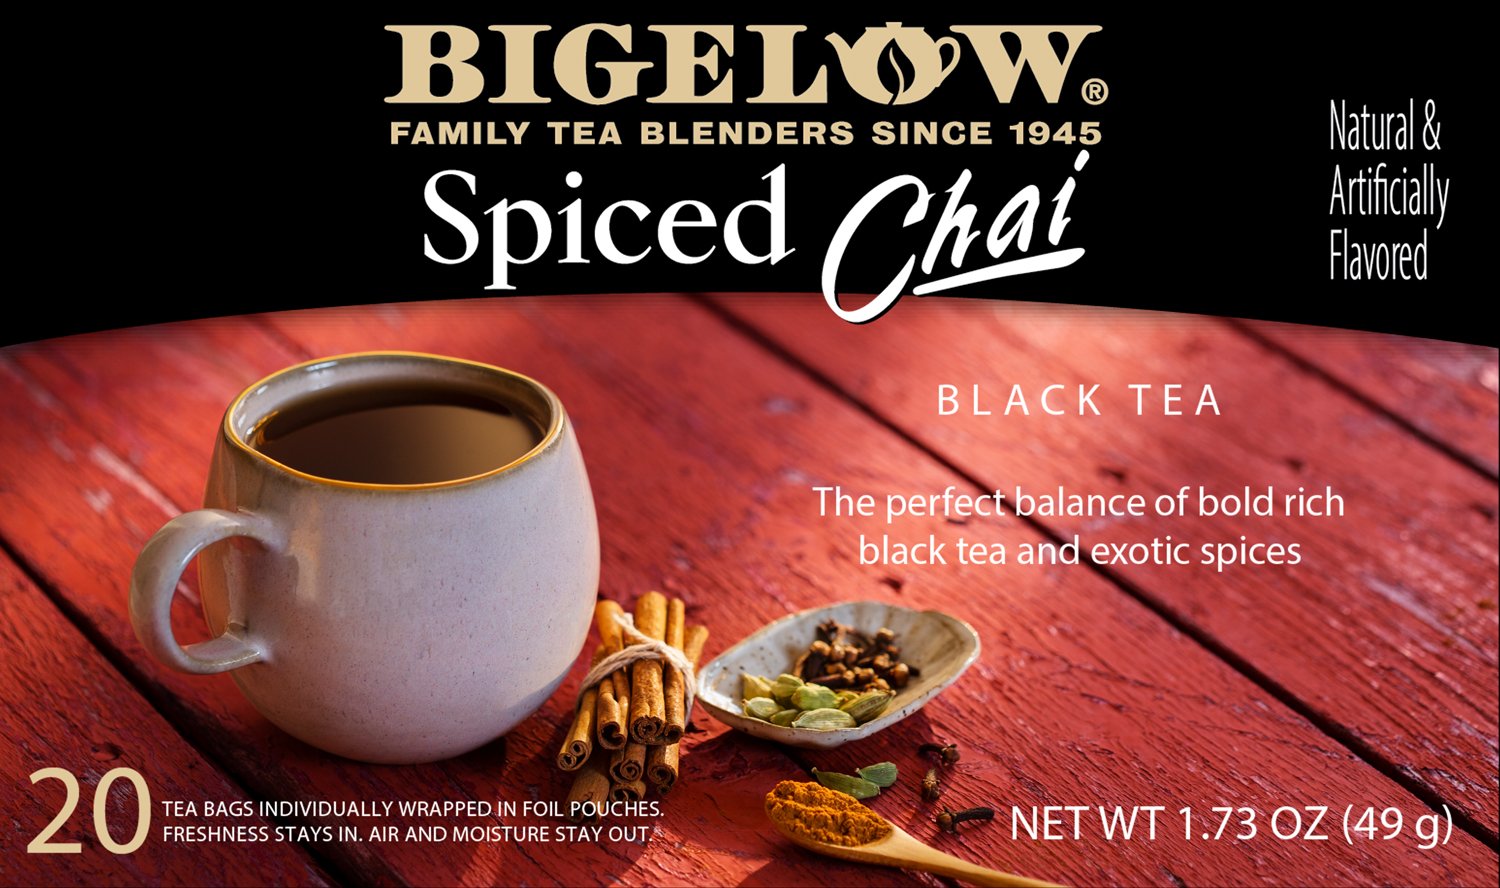 Bigelow - Black Tea - Spiced Chai 2.jpg